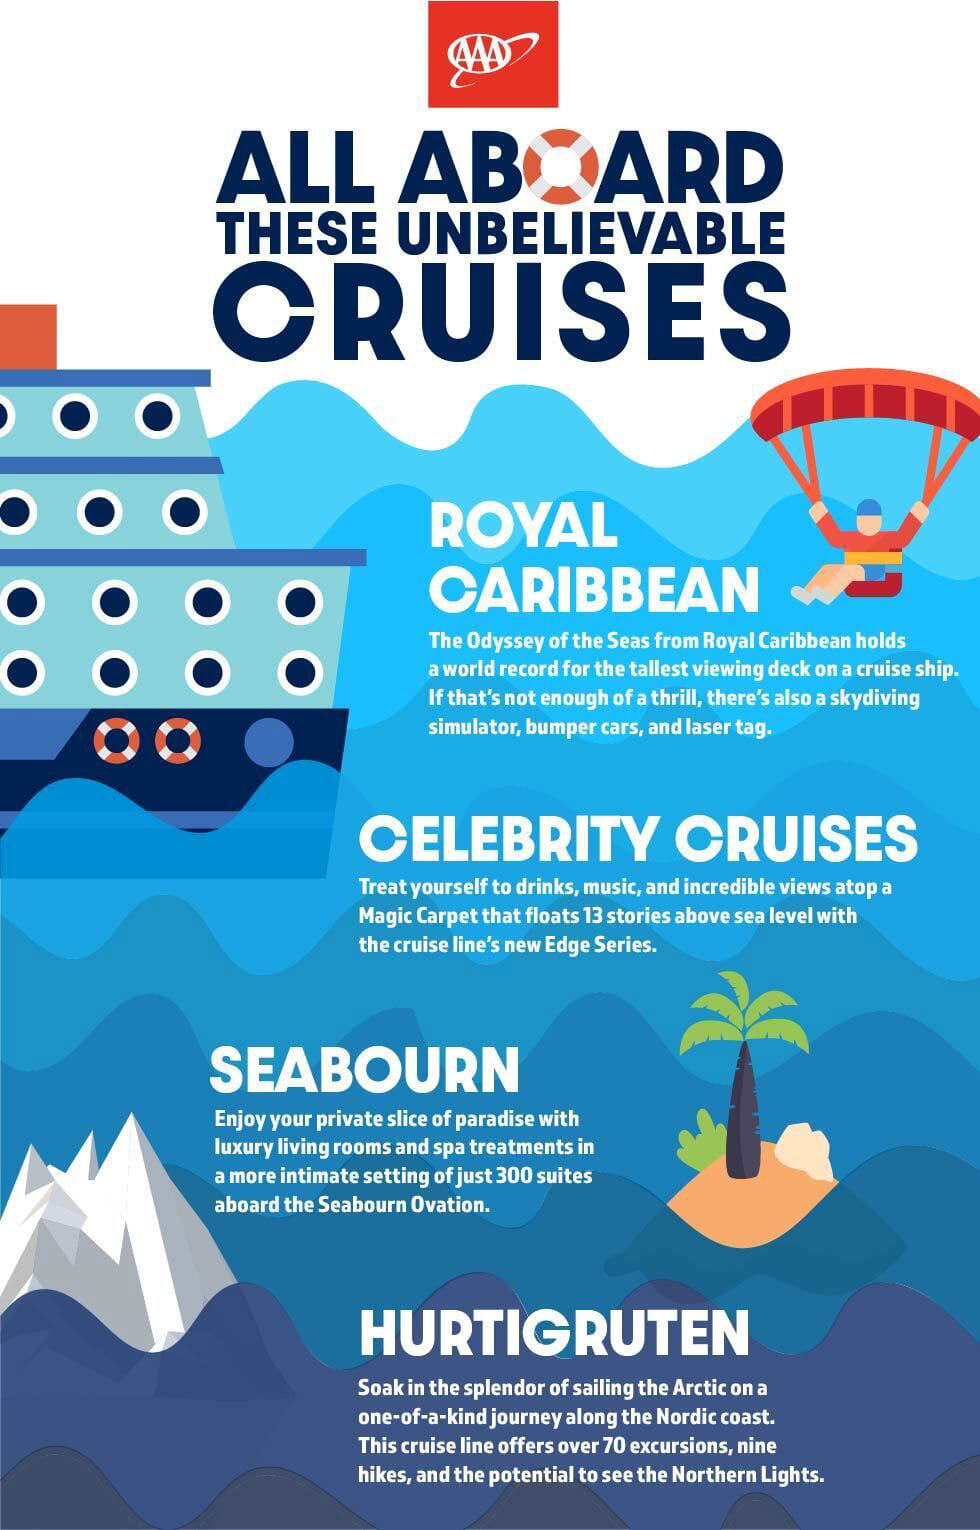 All Aborad Unbelievable Cruises